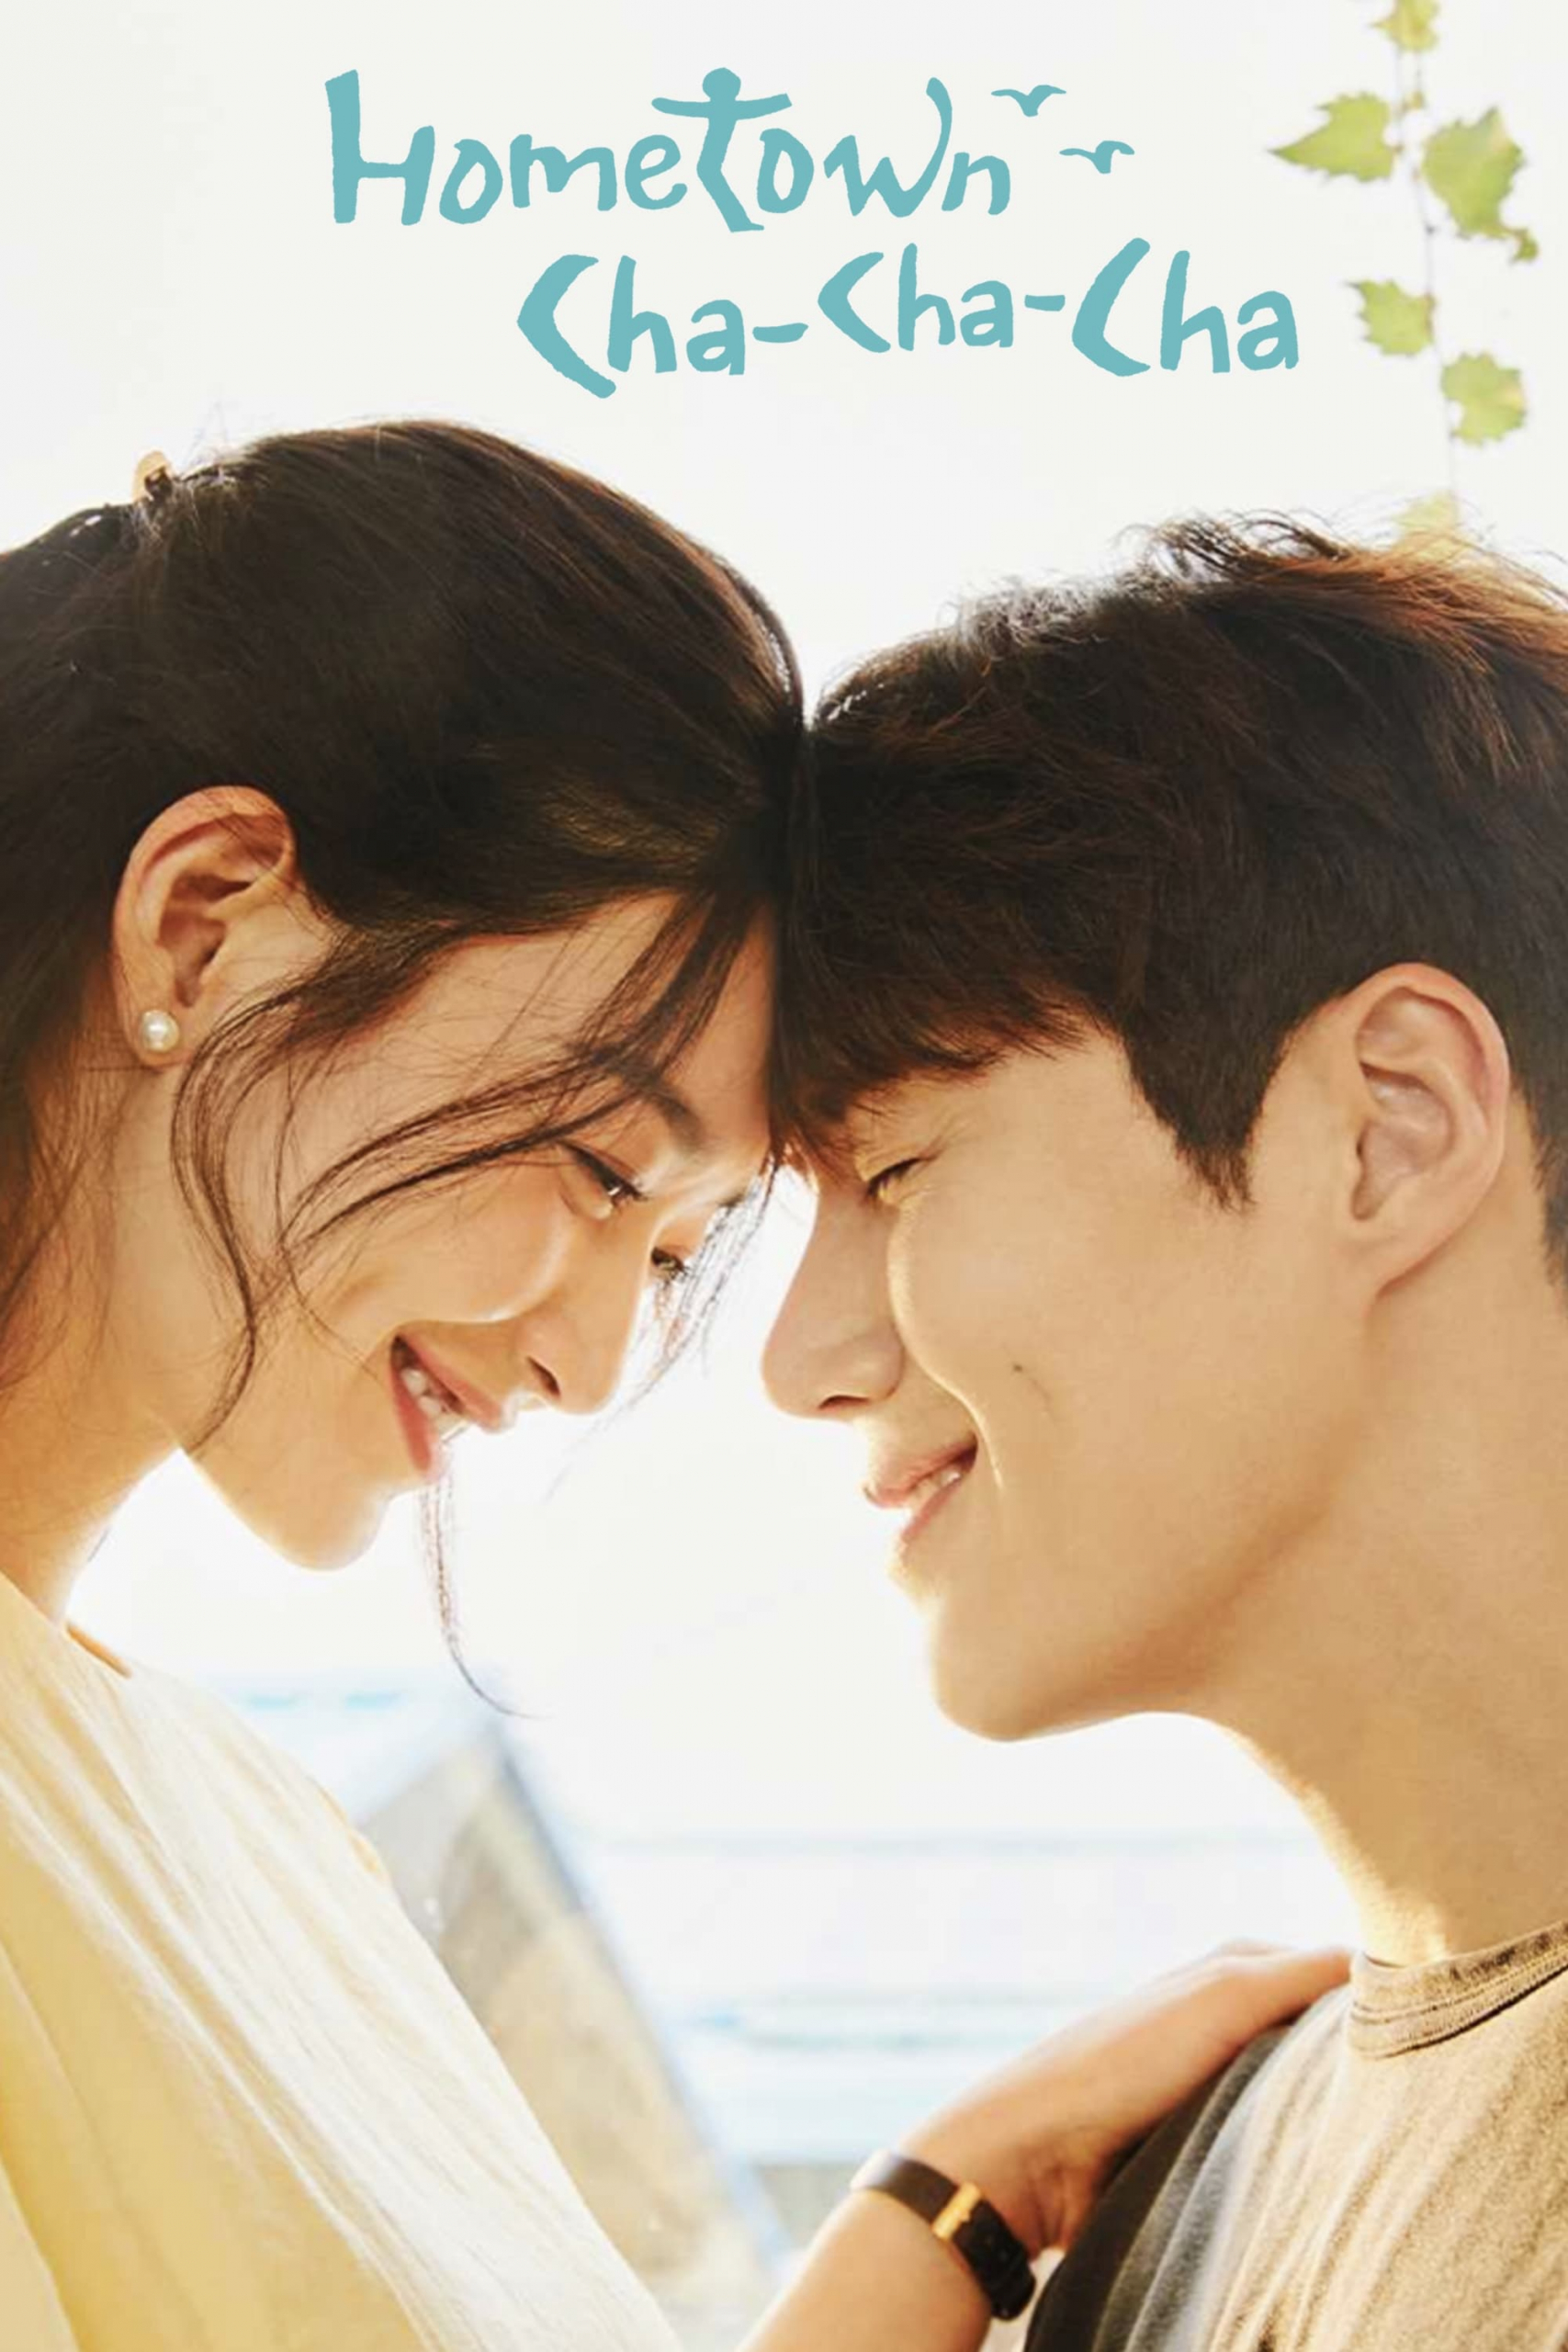 The Best Romantic Comedy Korean Dramas On Netflix | Ankita Sodhia's Blog